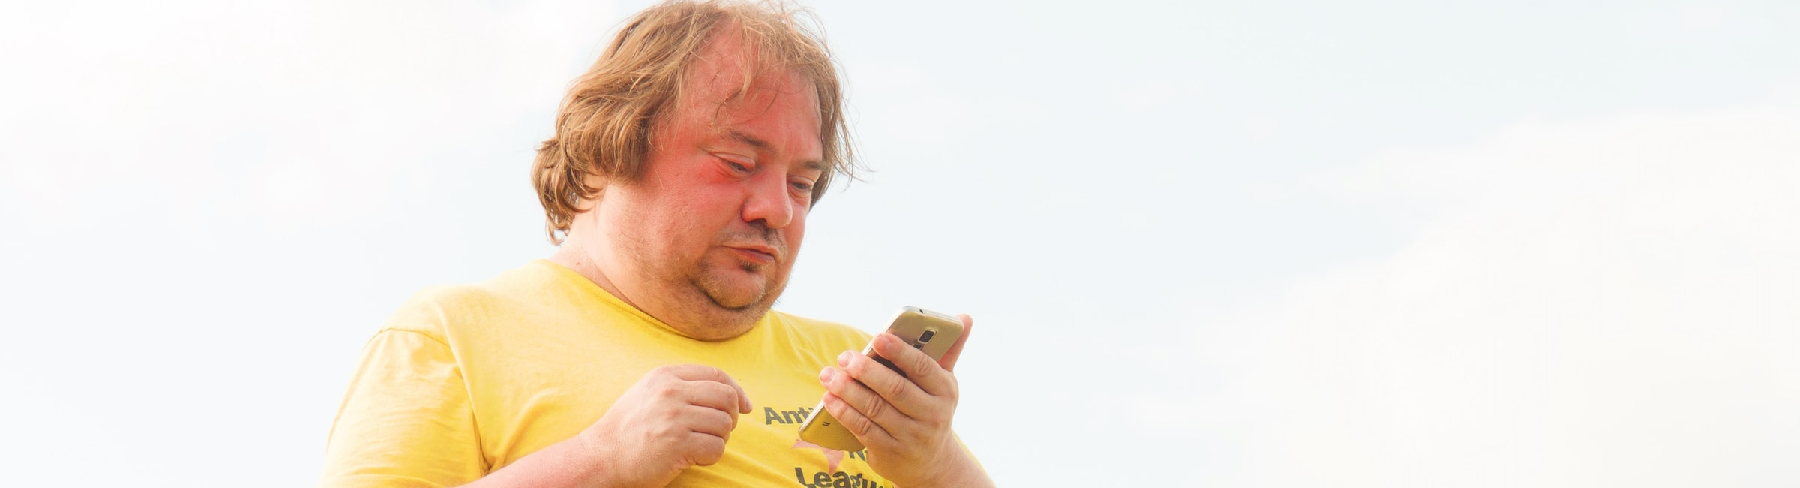 Obese man looking at phone